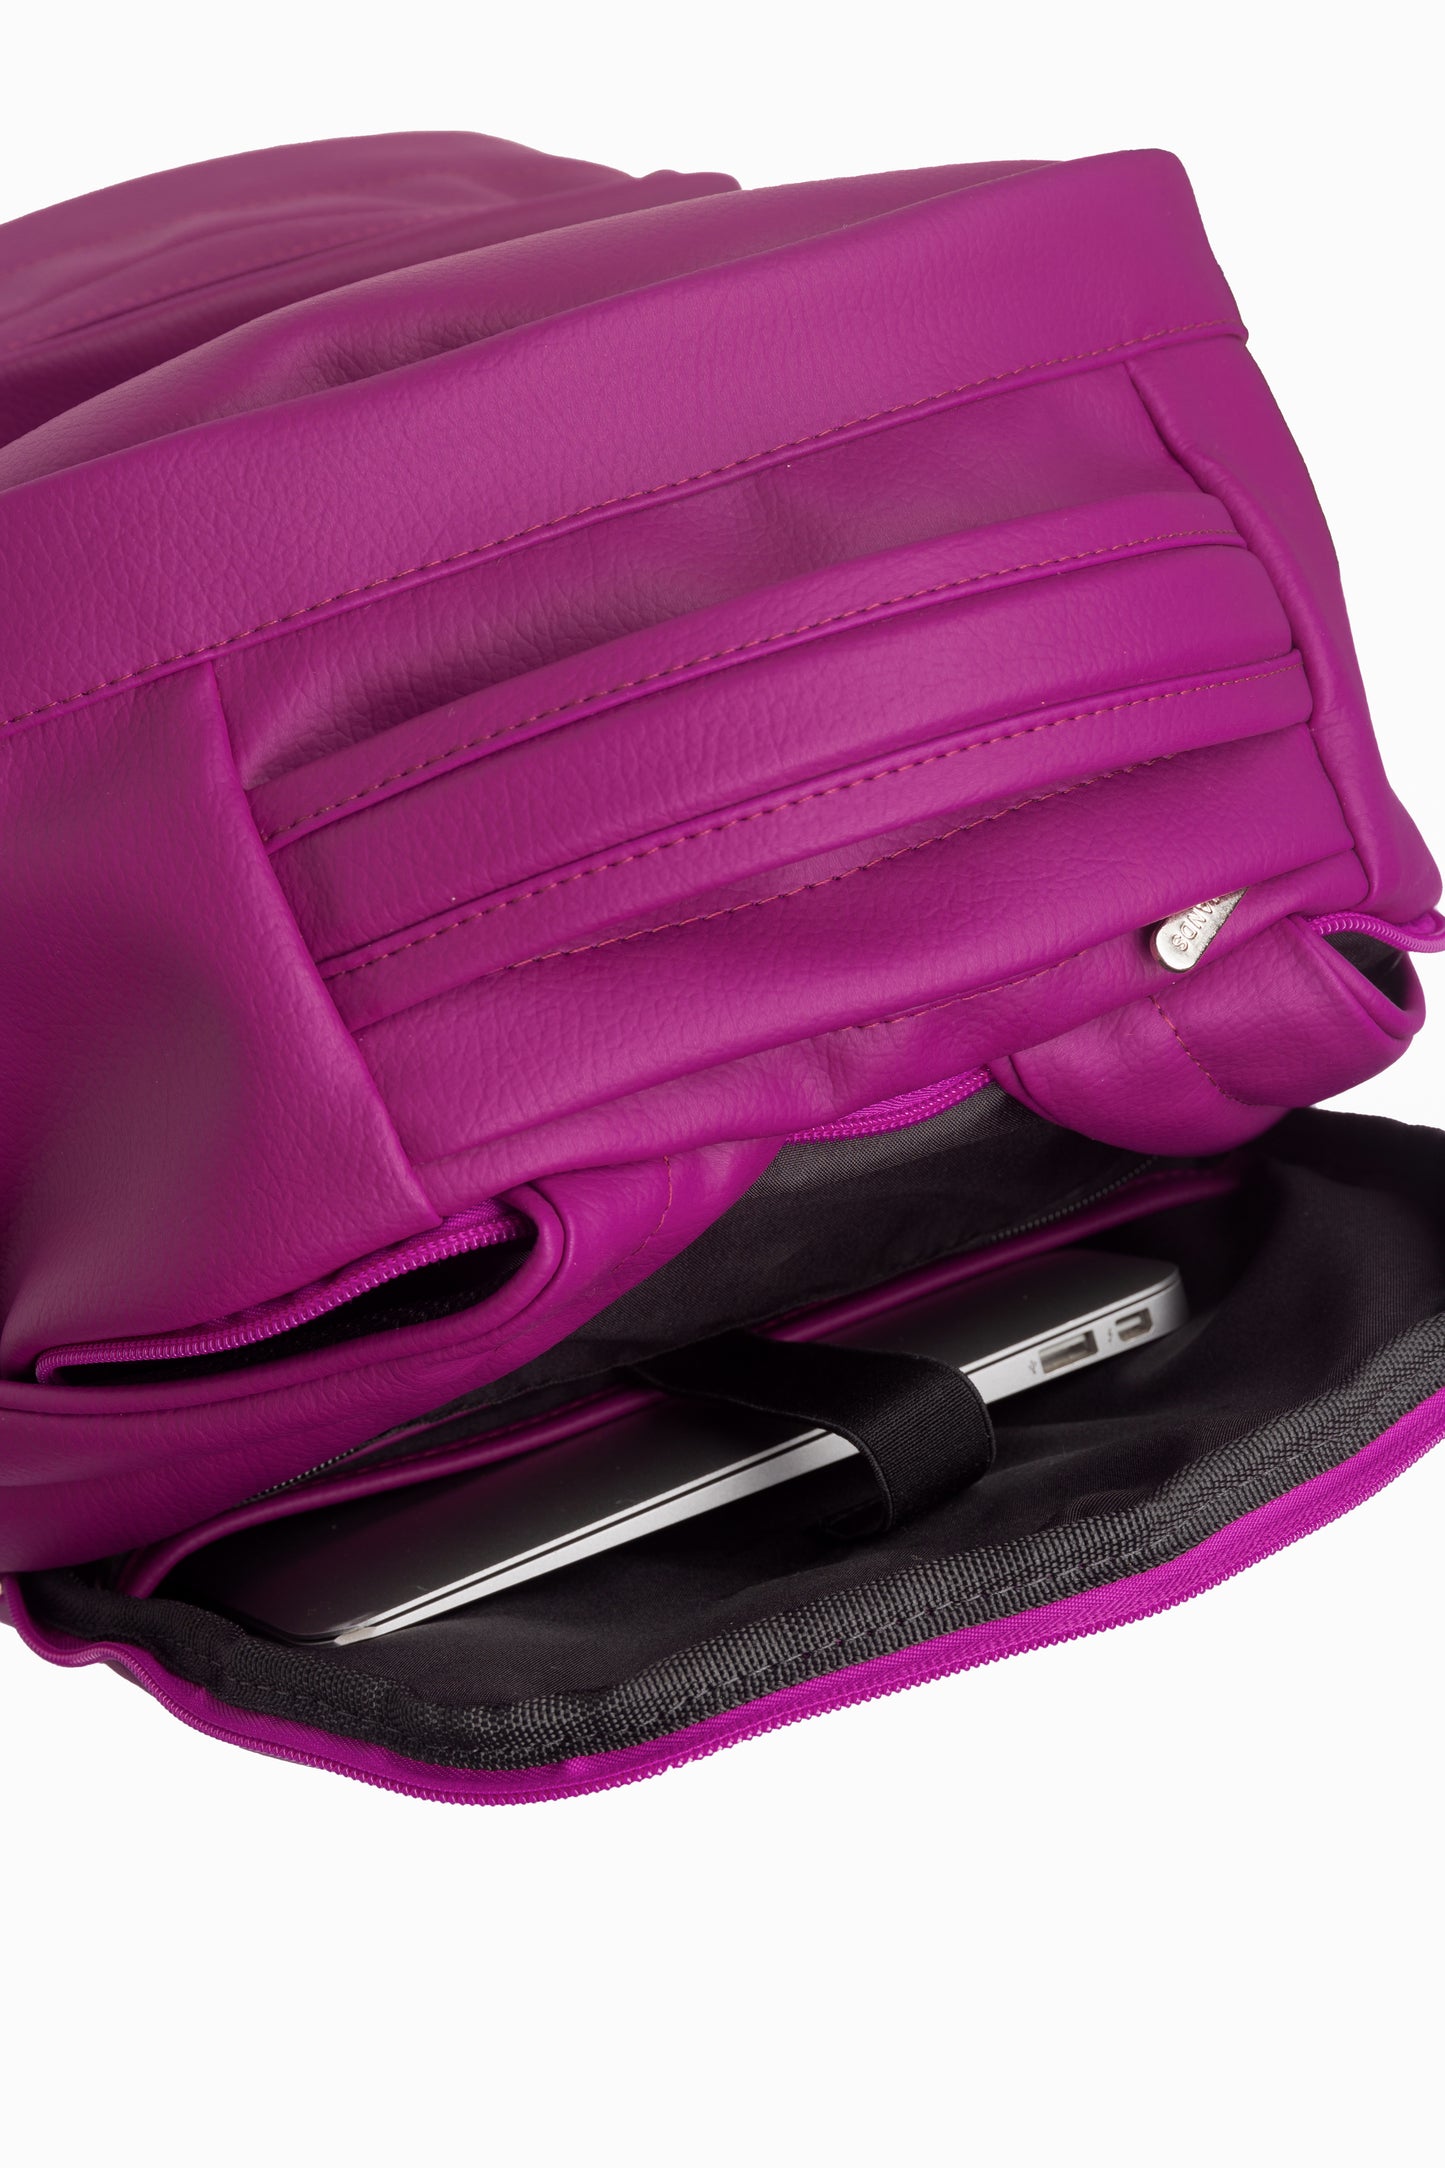 Purple Premium Backpack